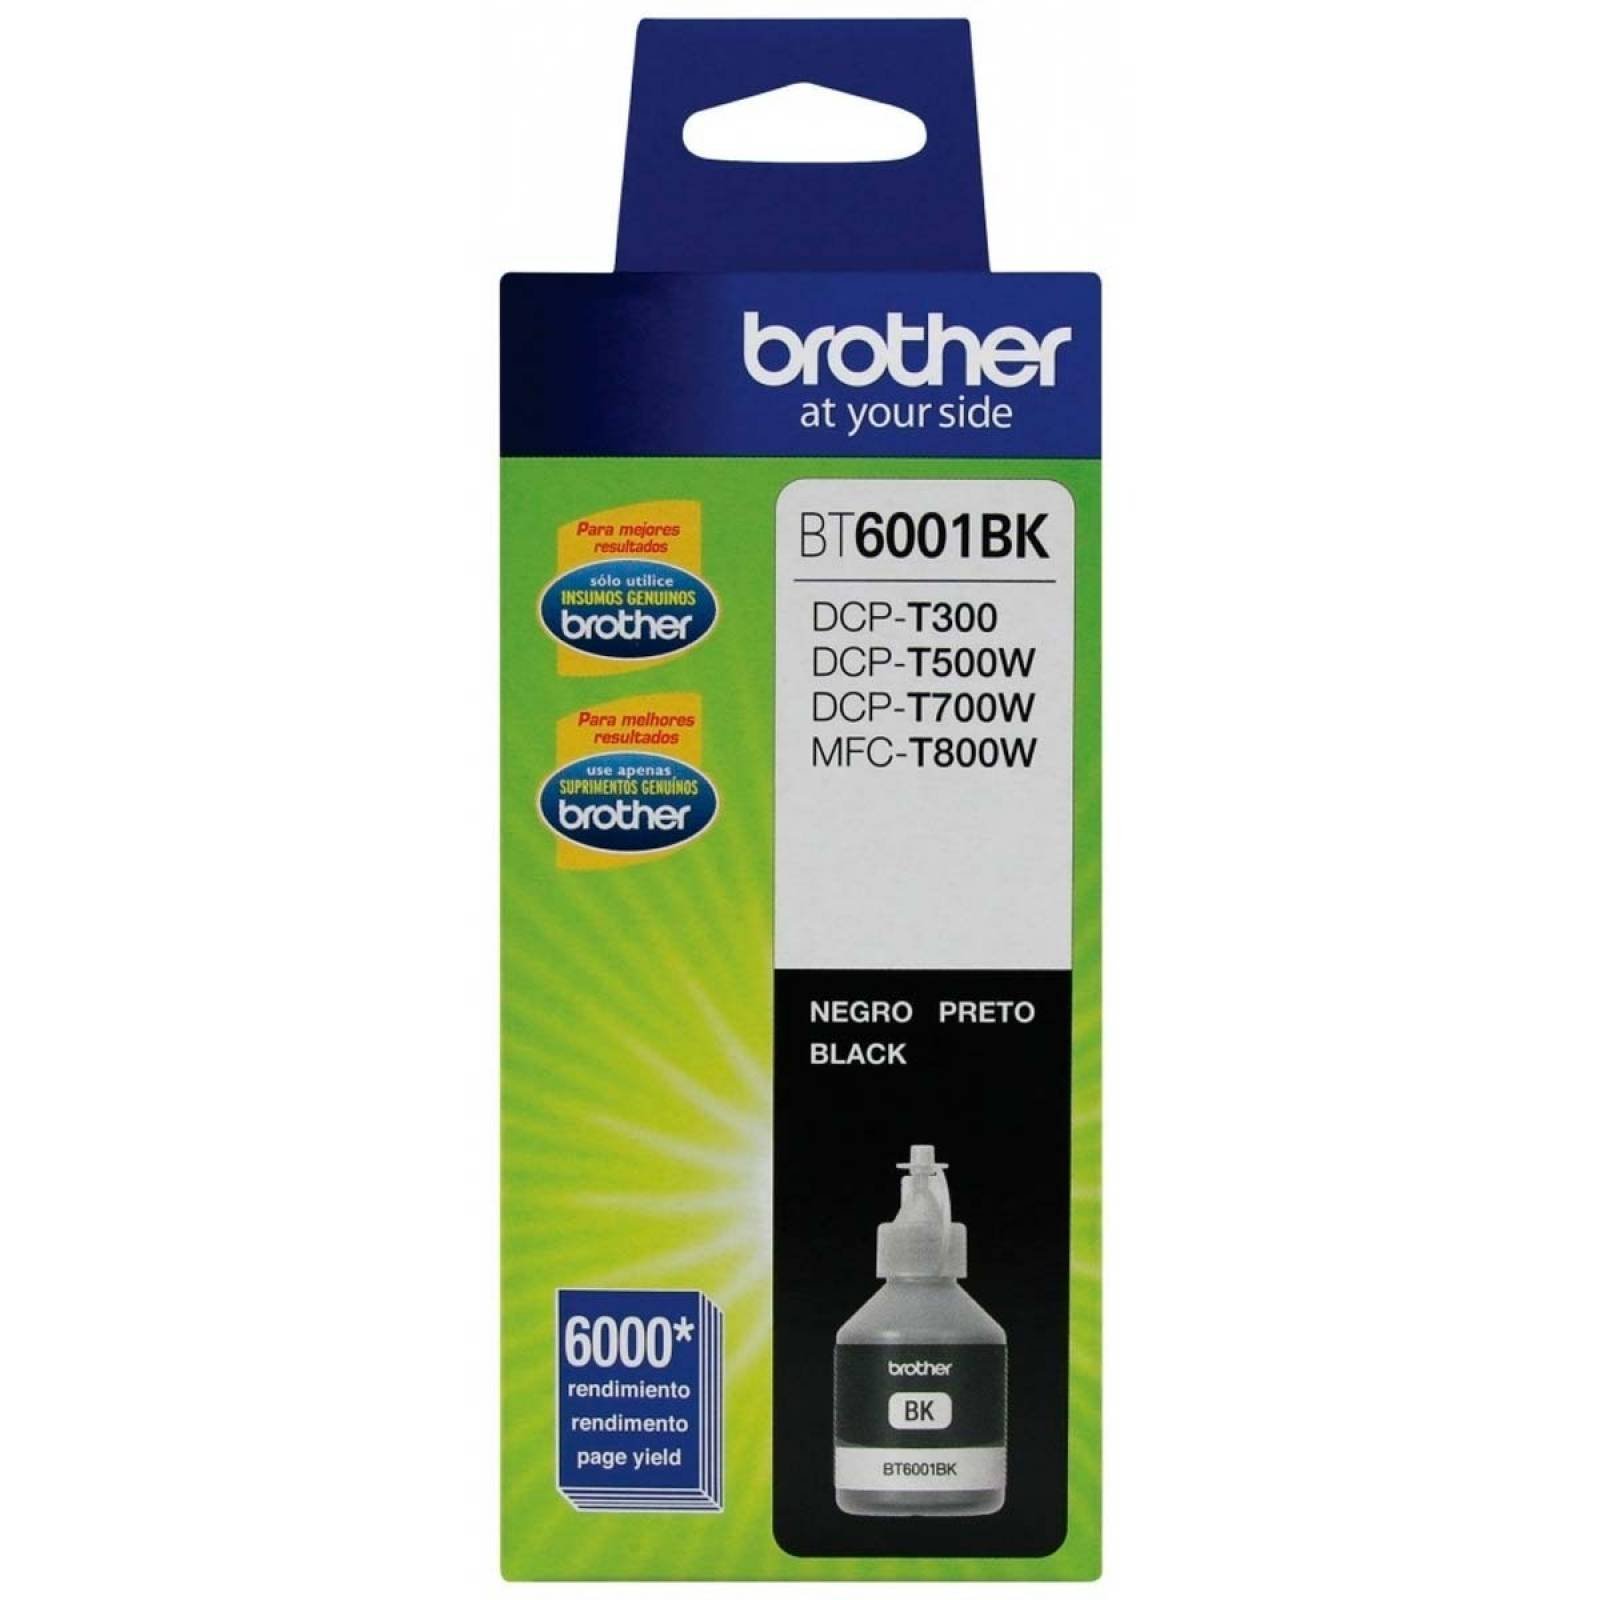 Botella de tinta BROTHER BT6001BK negra